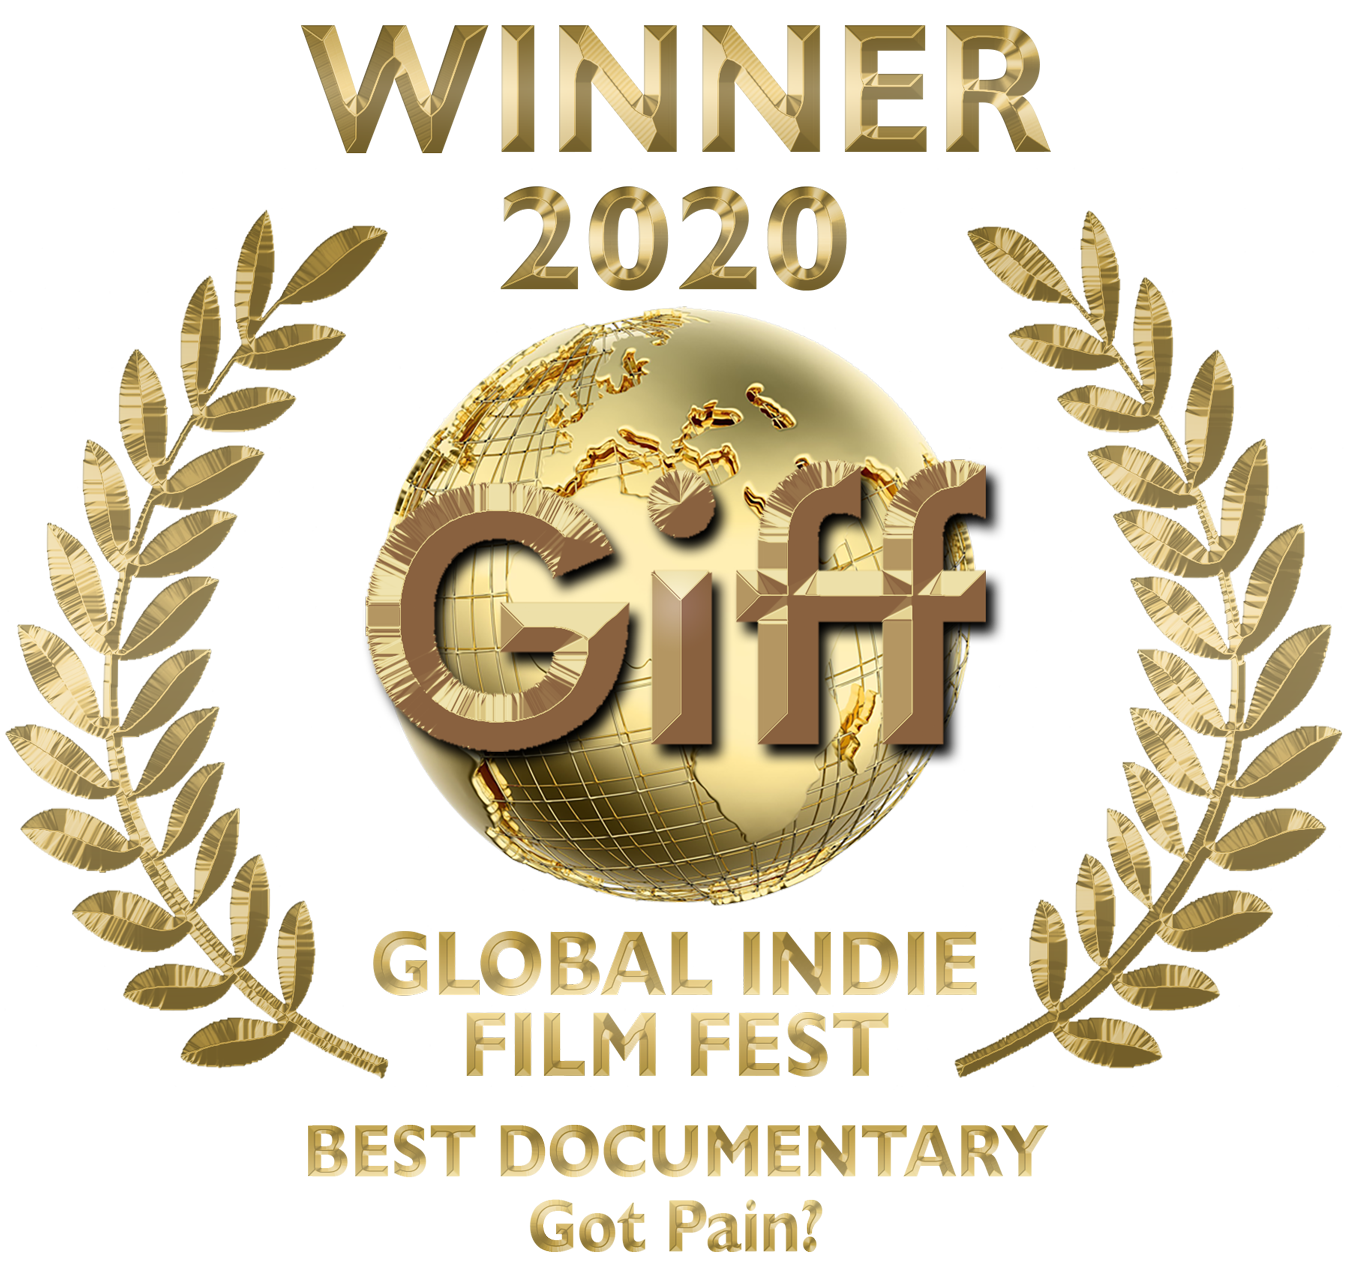 Giff Gold Award Documentary